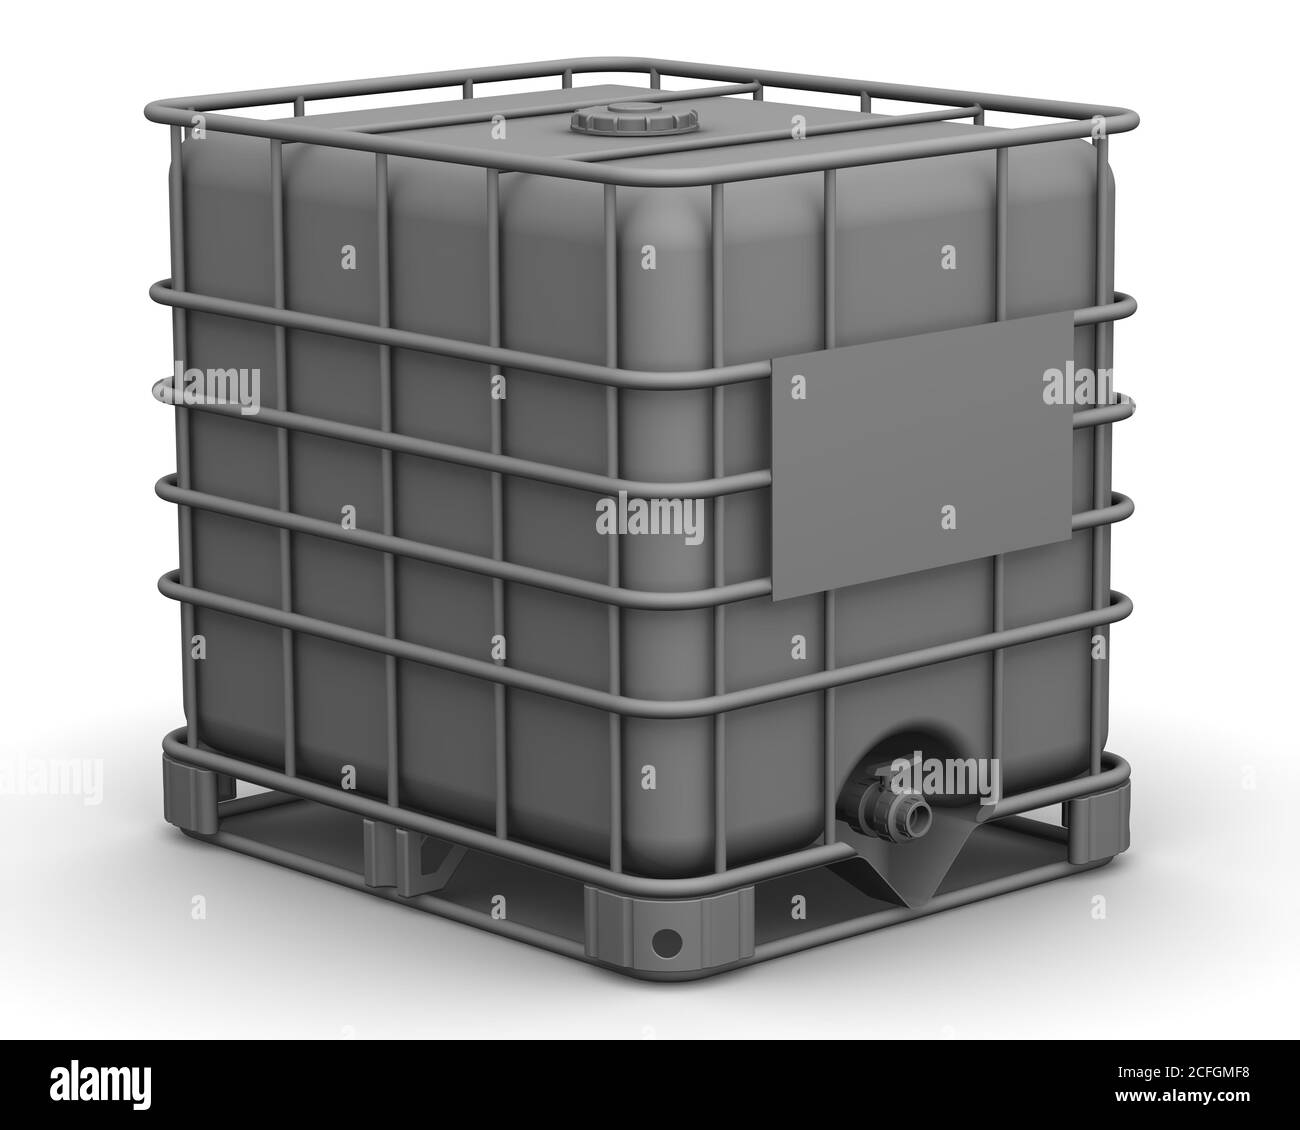 1000 Litre Intermediate bulk containers Liquid Storage Tank on construction  site Stock Photo - Alamy